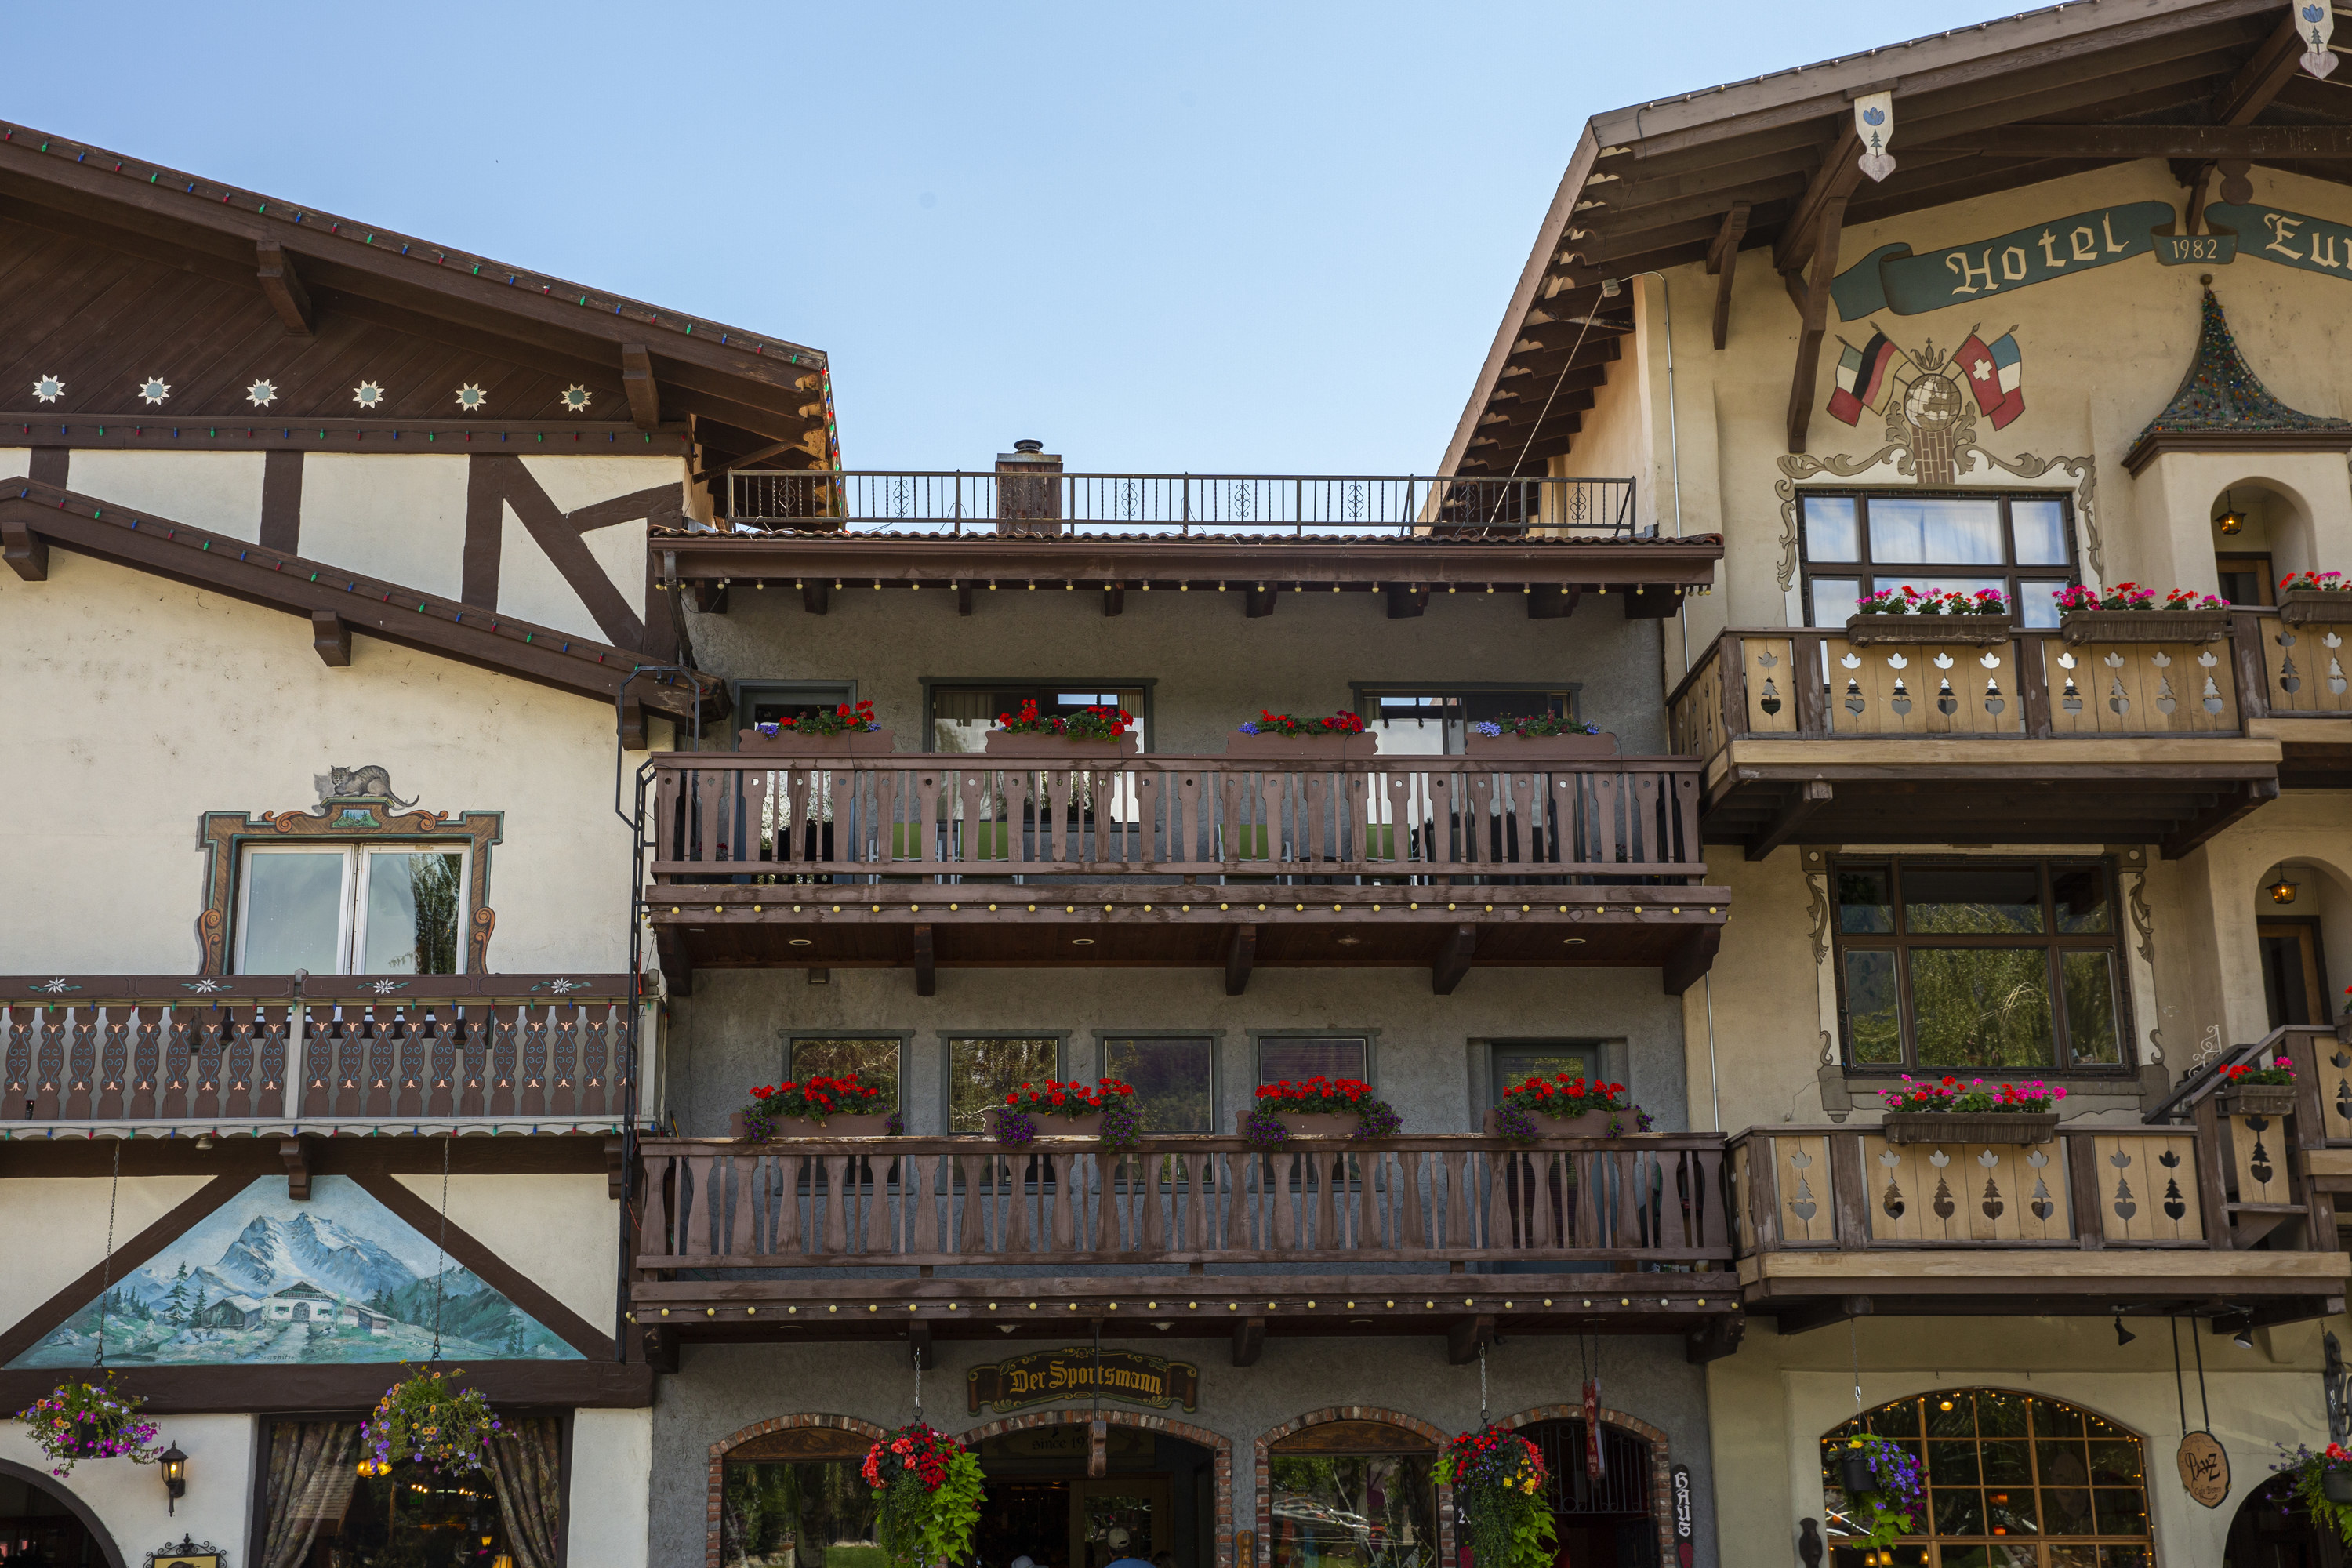 The buildings and impressive architecture in Leavenworth